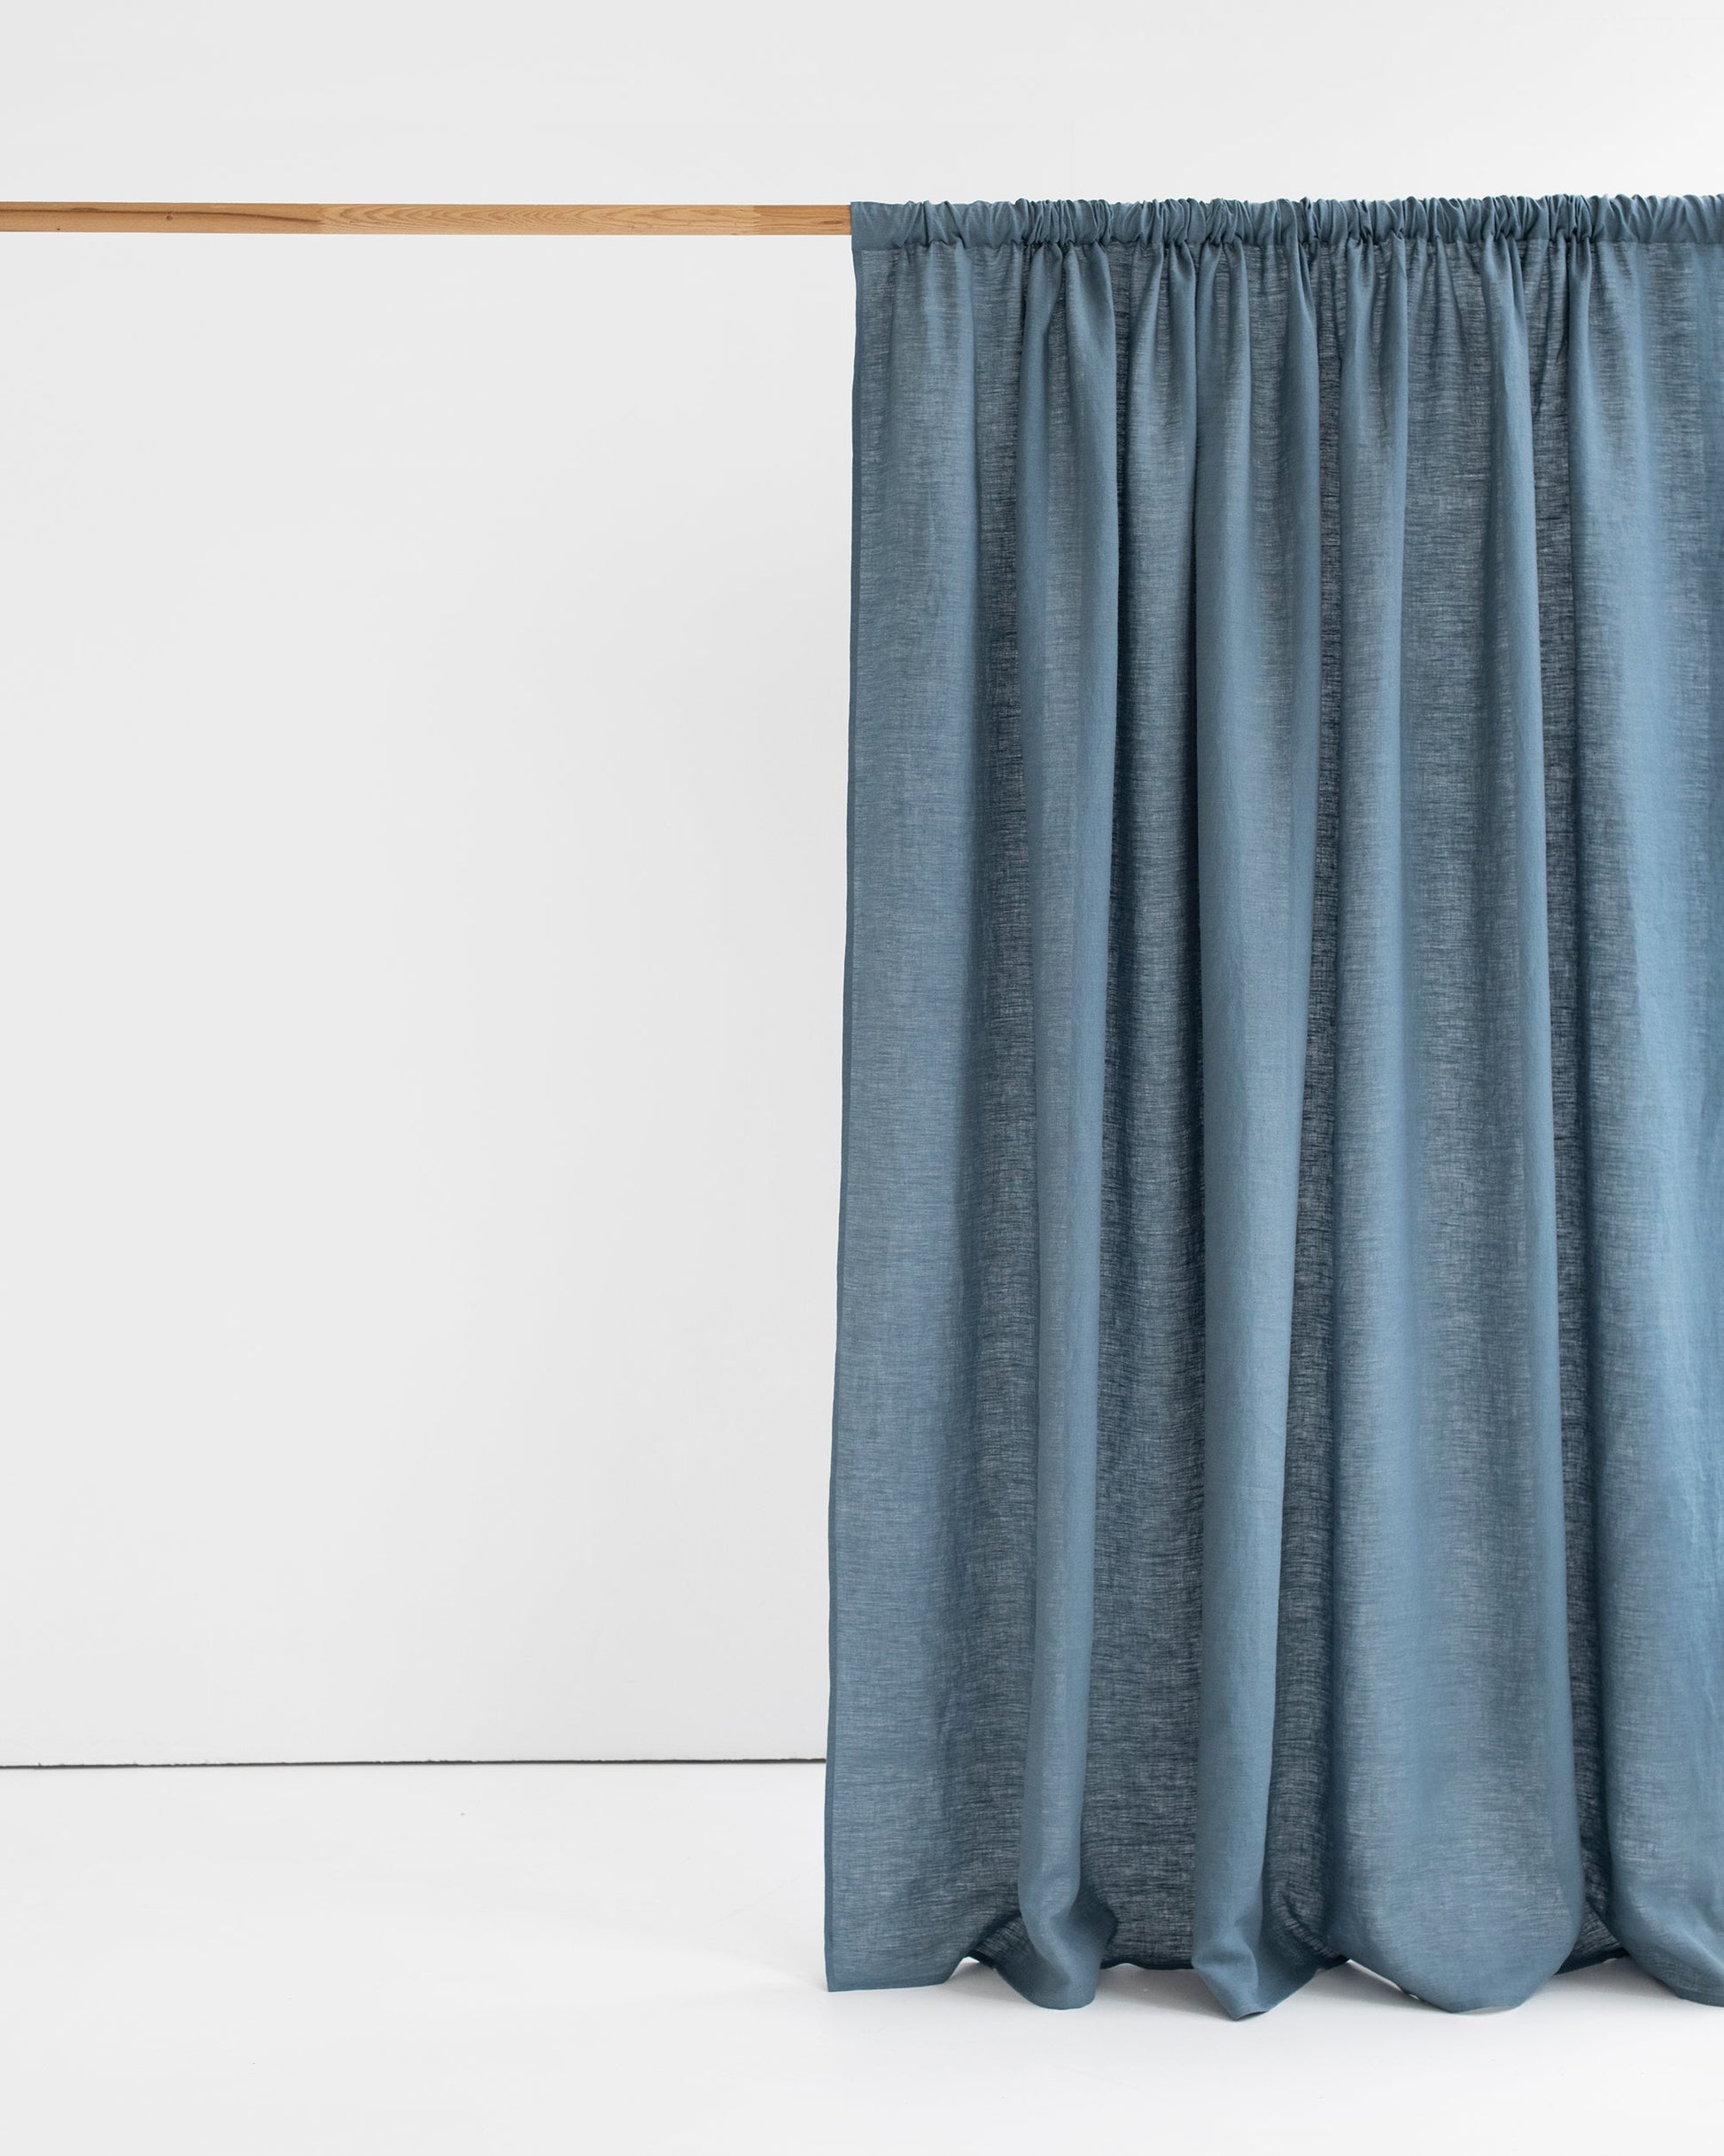 Rod pocket linen curtain panel (1 pcs) in Gray blue - MagicLinen